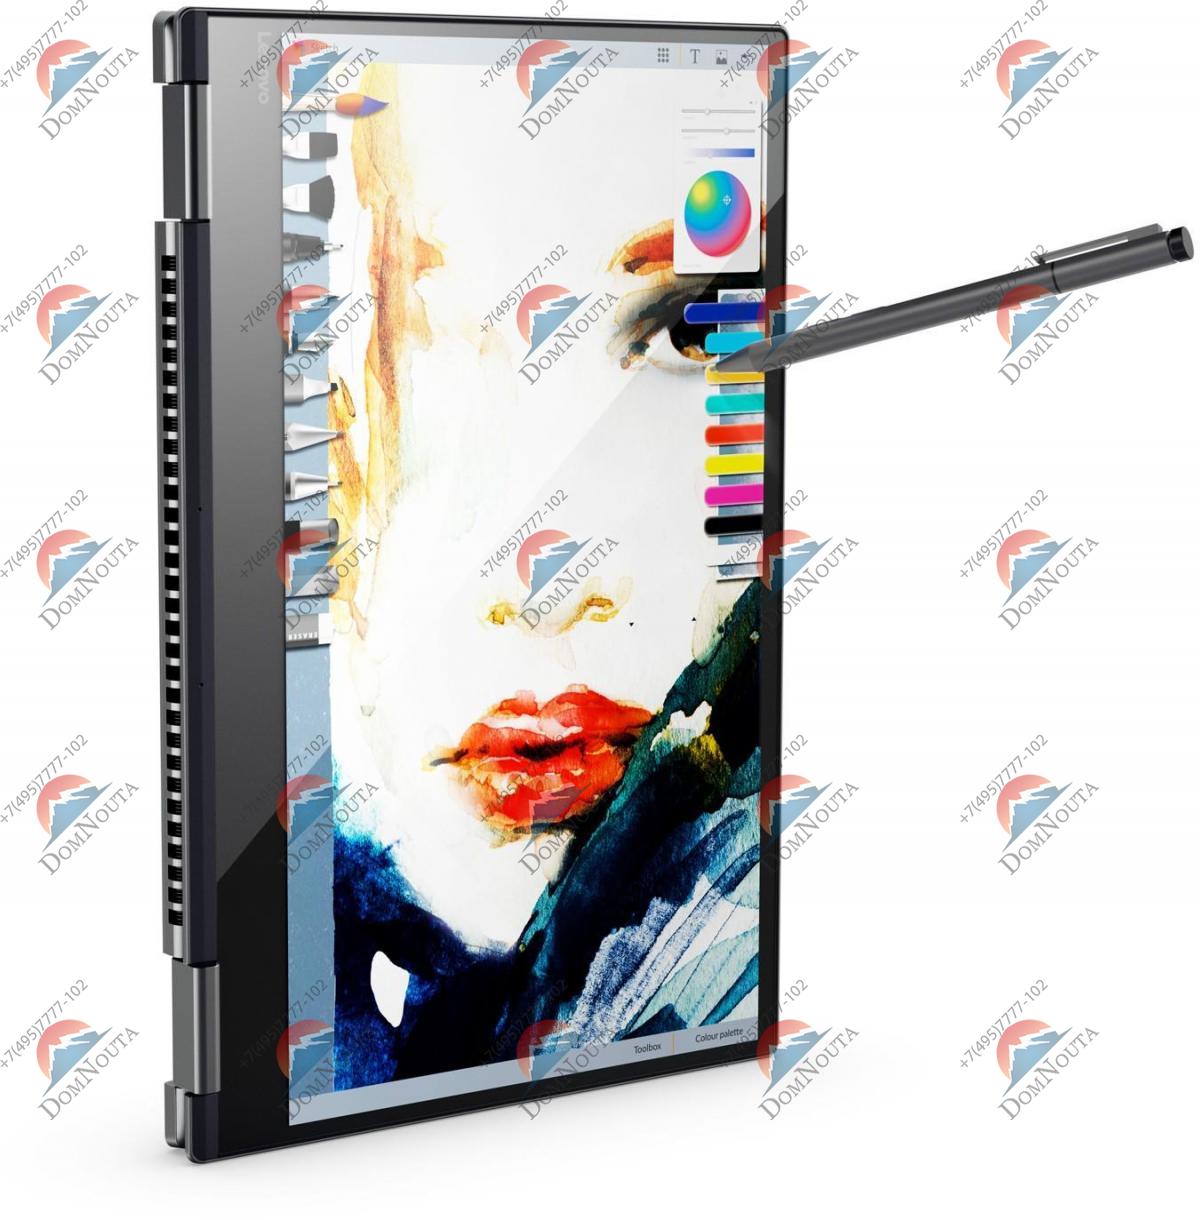 Ноутбук Lenovo IdeaPad Yoga 720